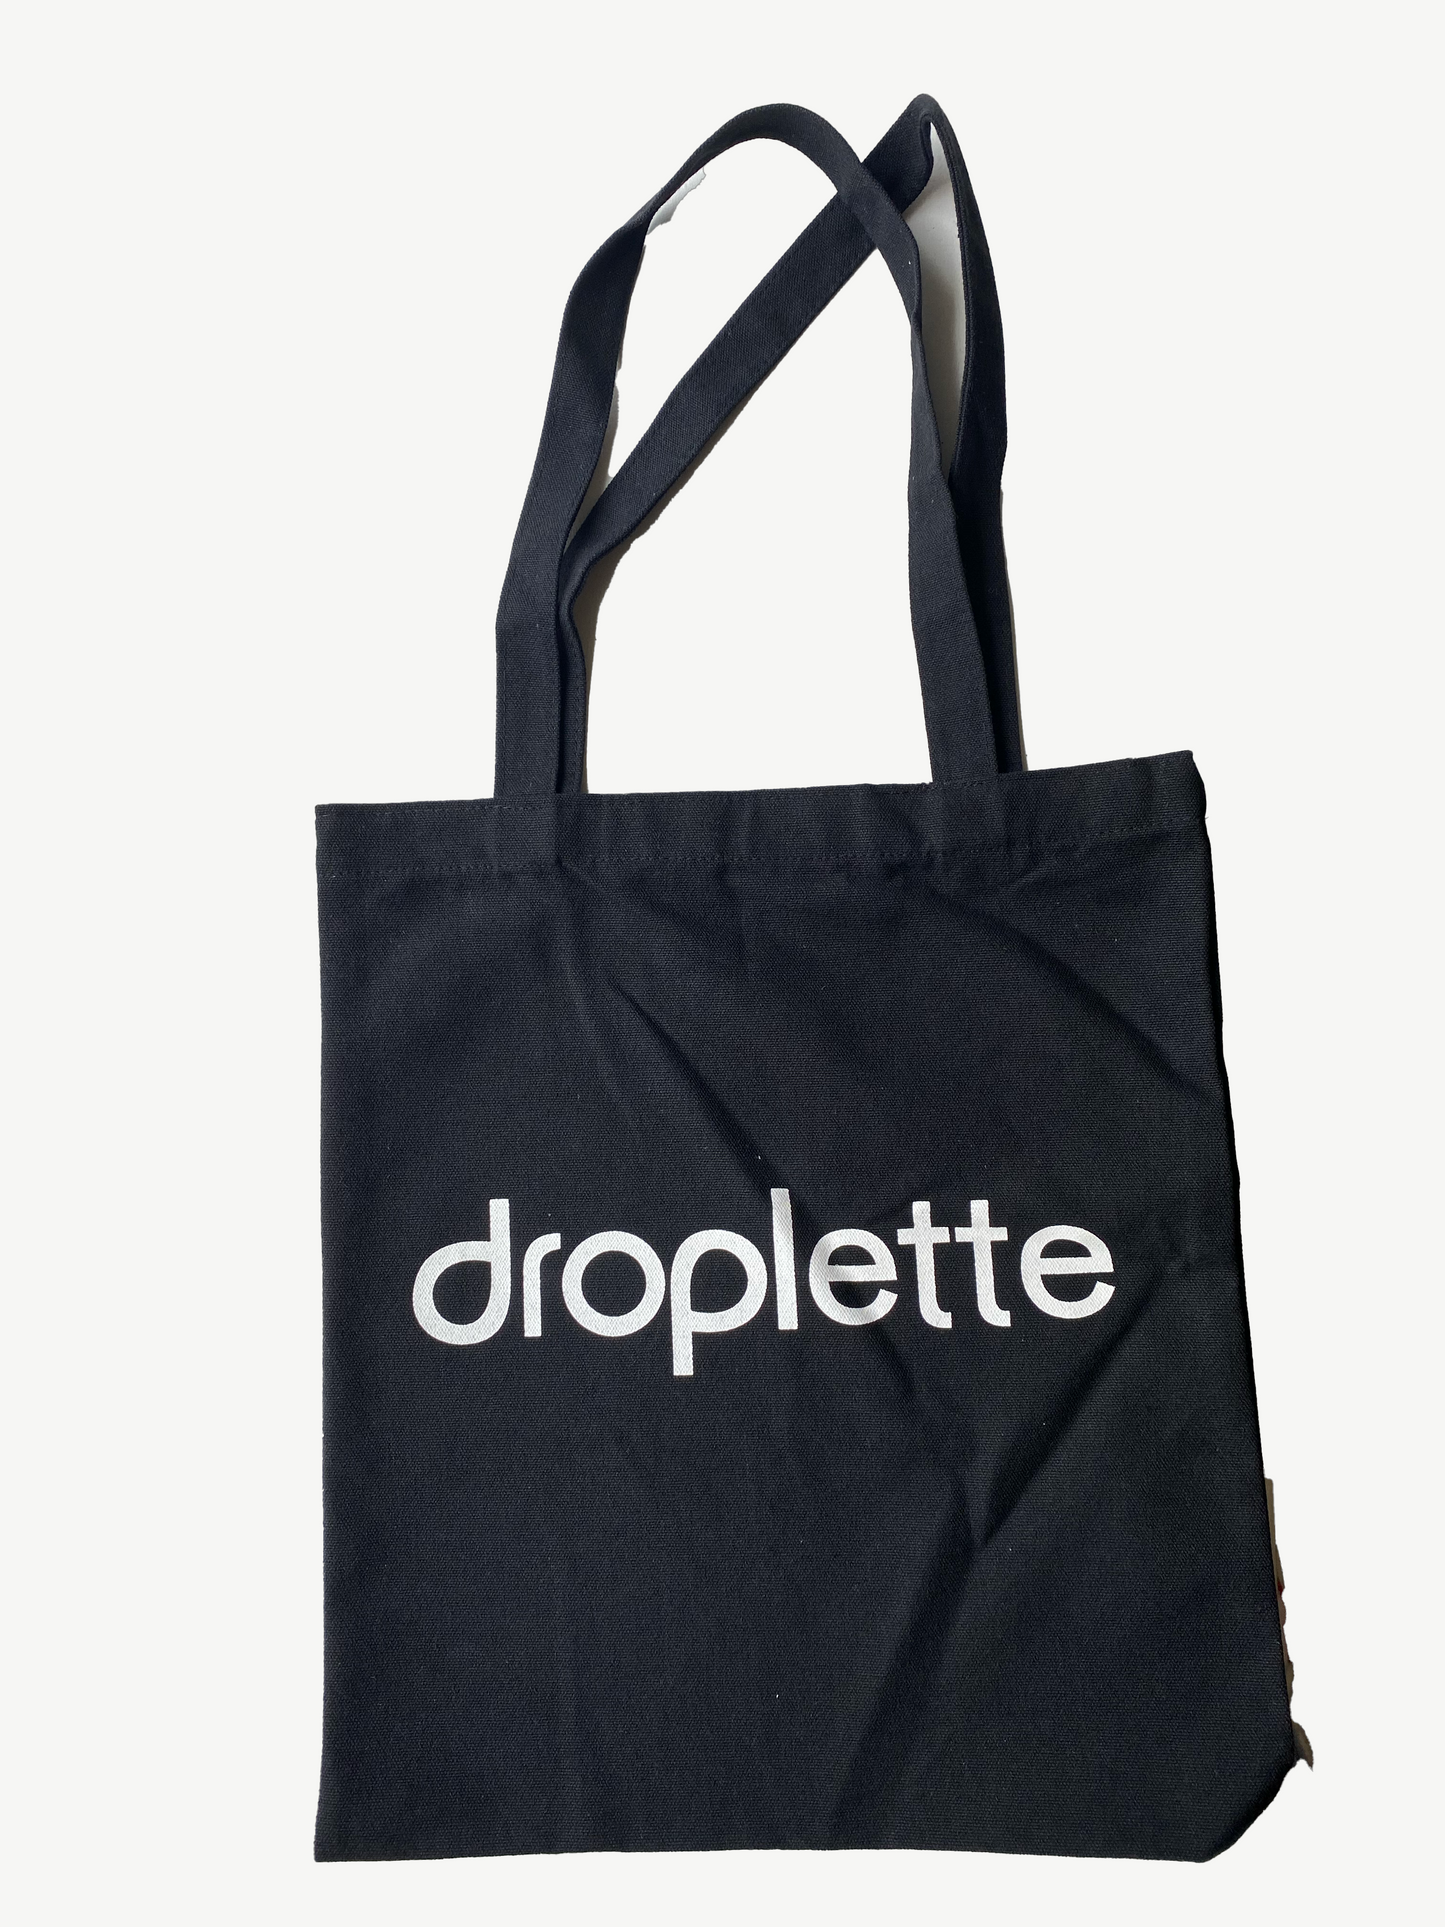 Droplette Canvas Tote Bag